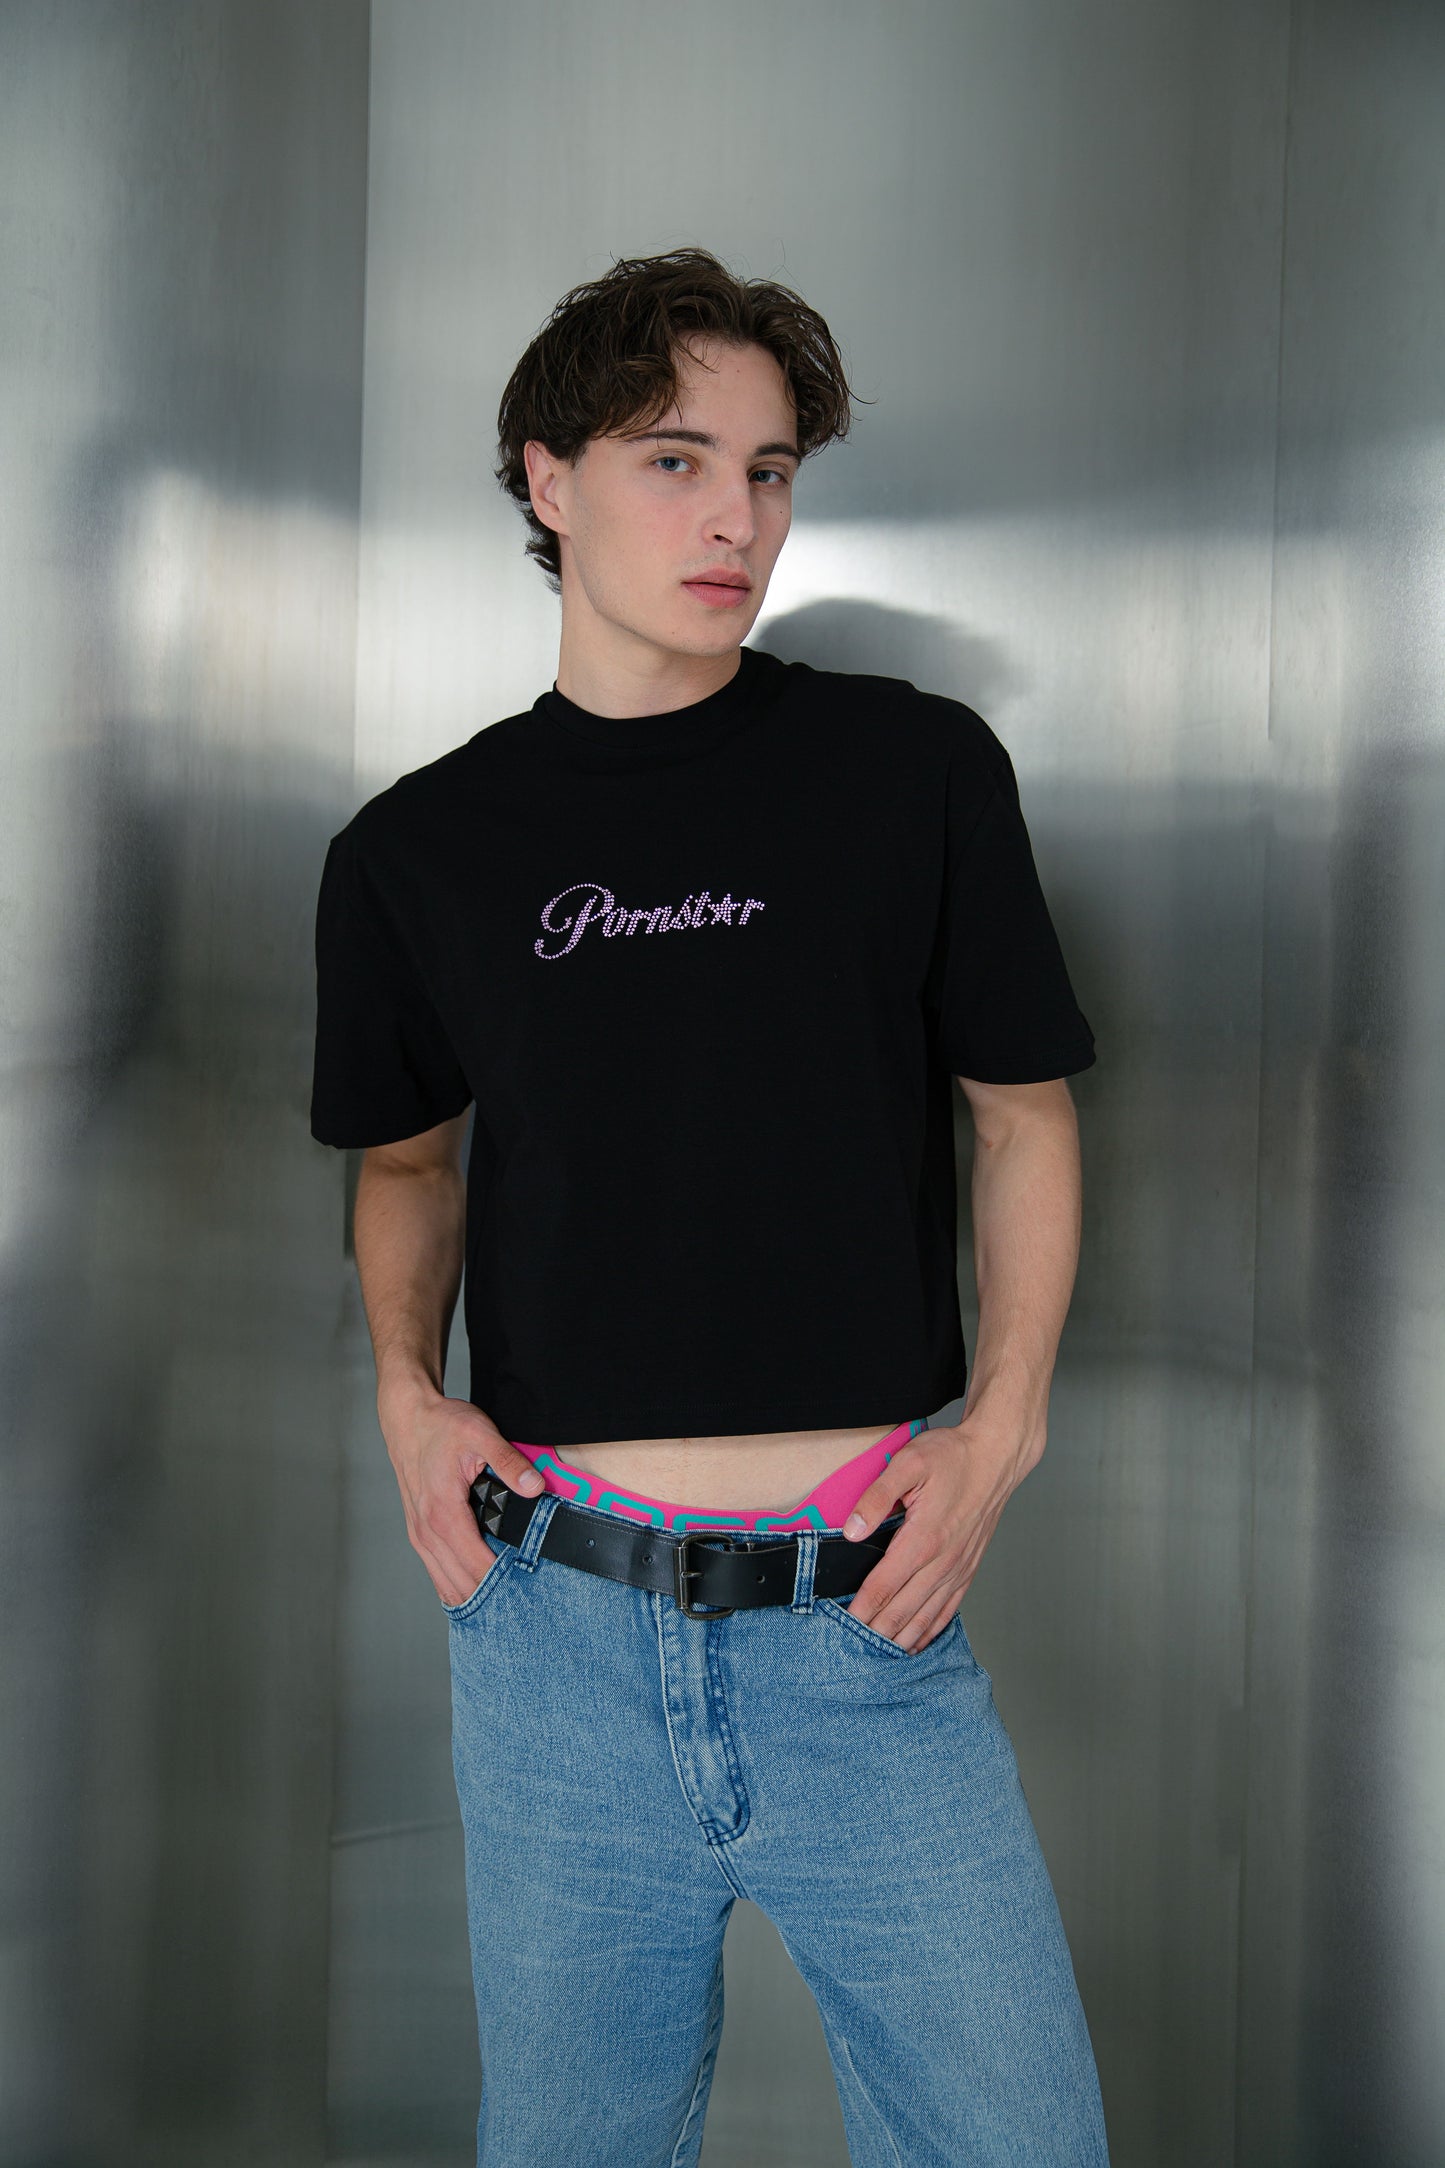 Pornstar t-shirt with pink rhinestones